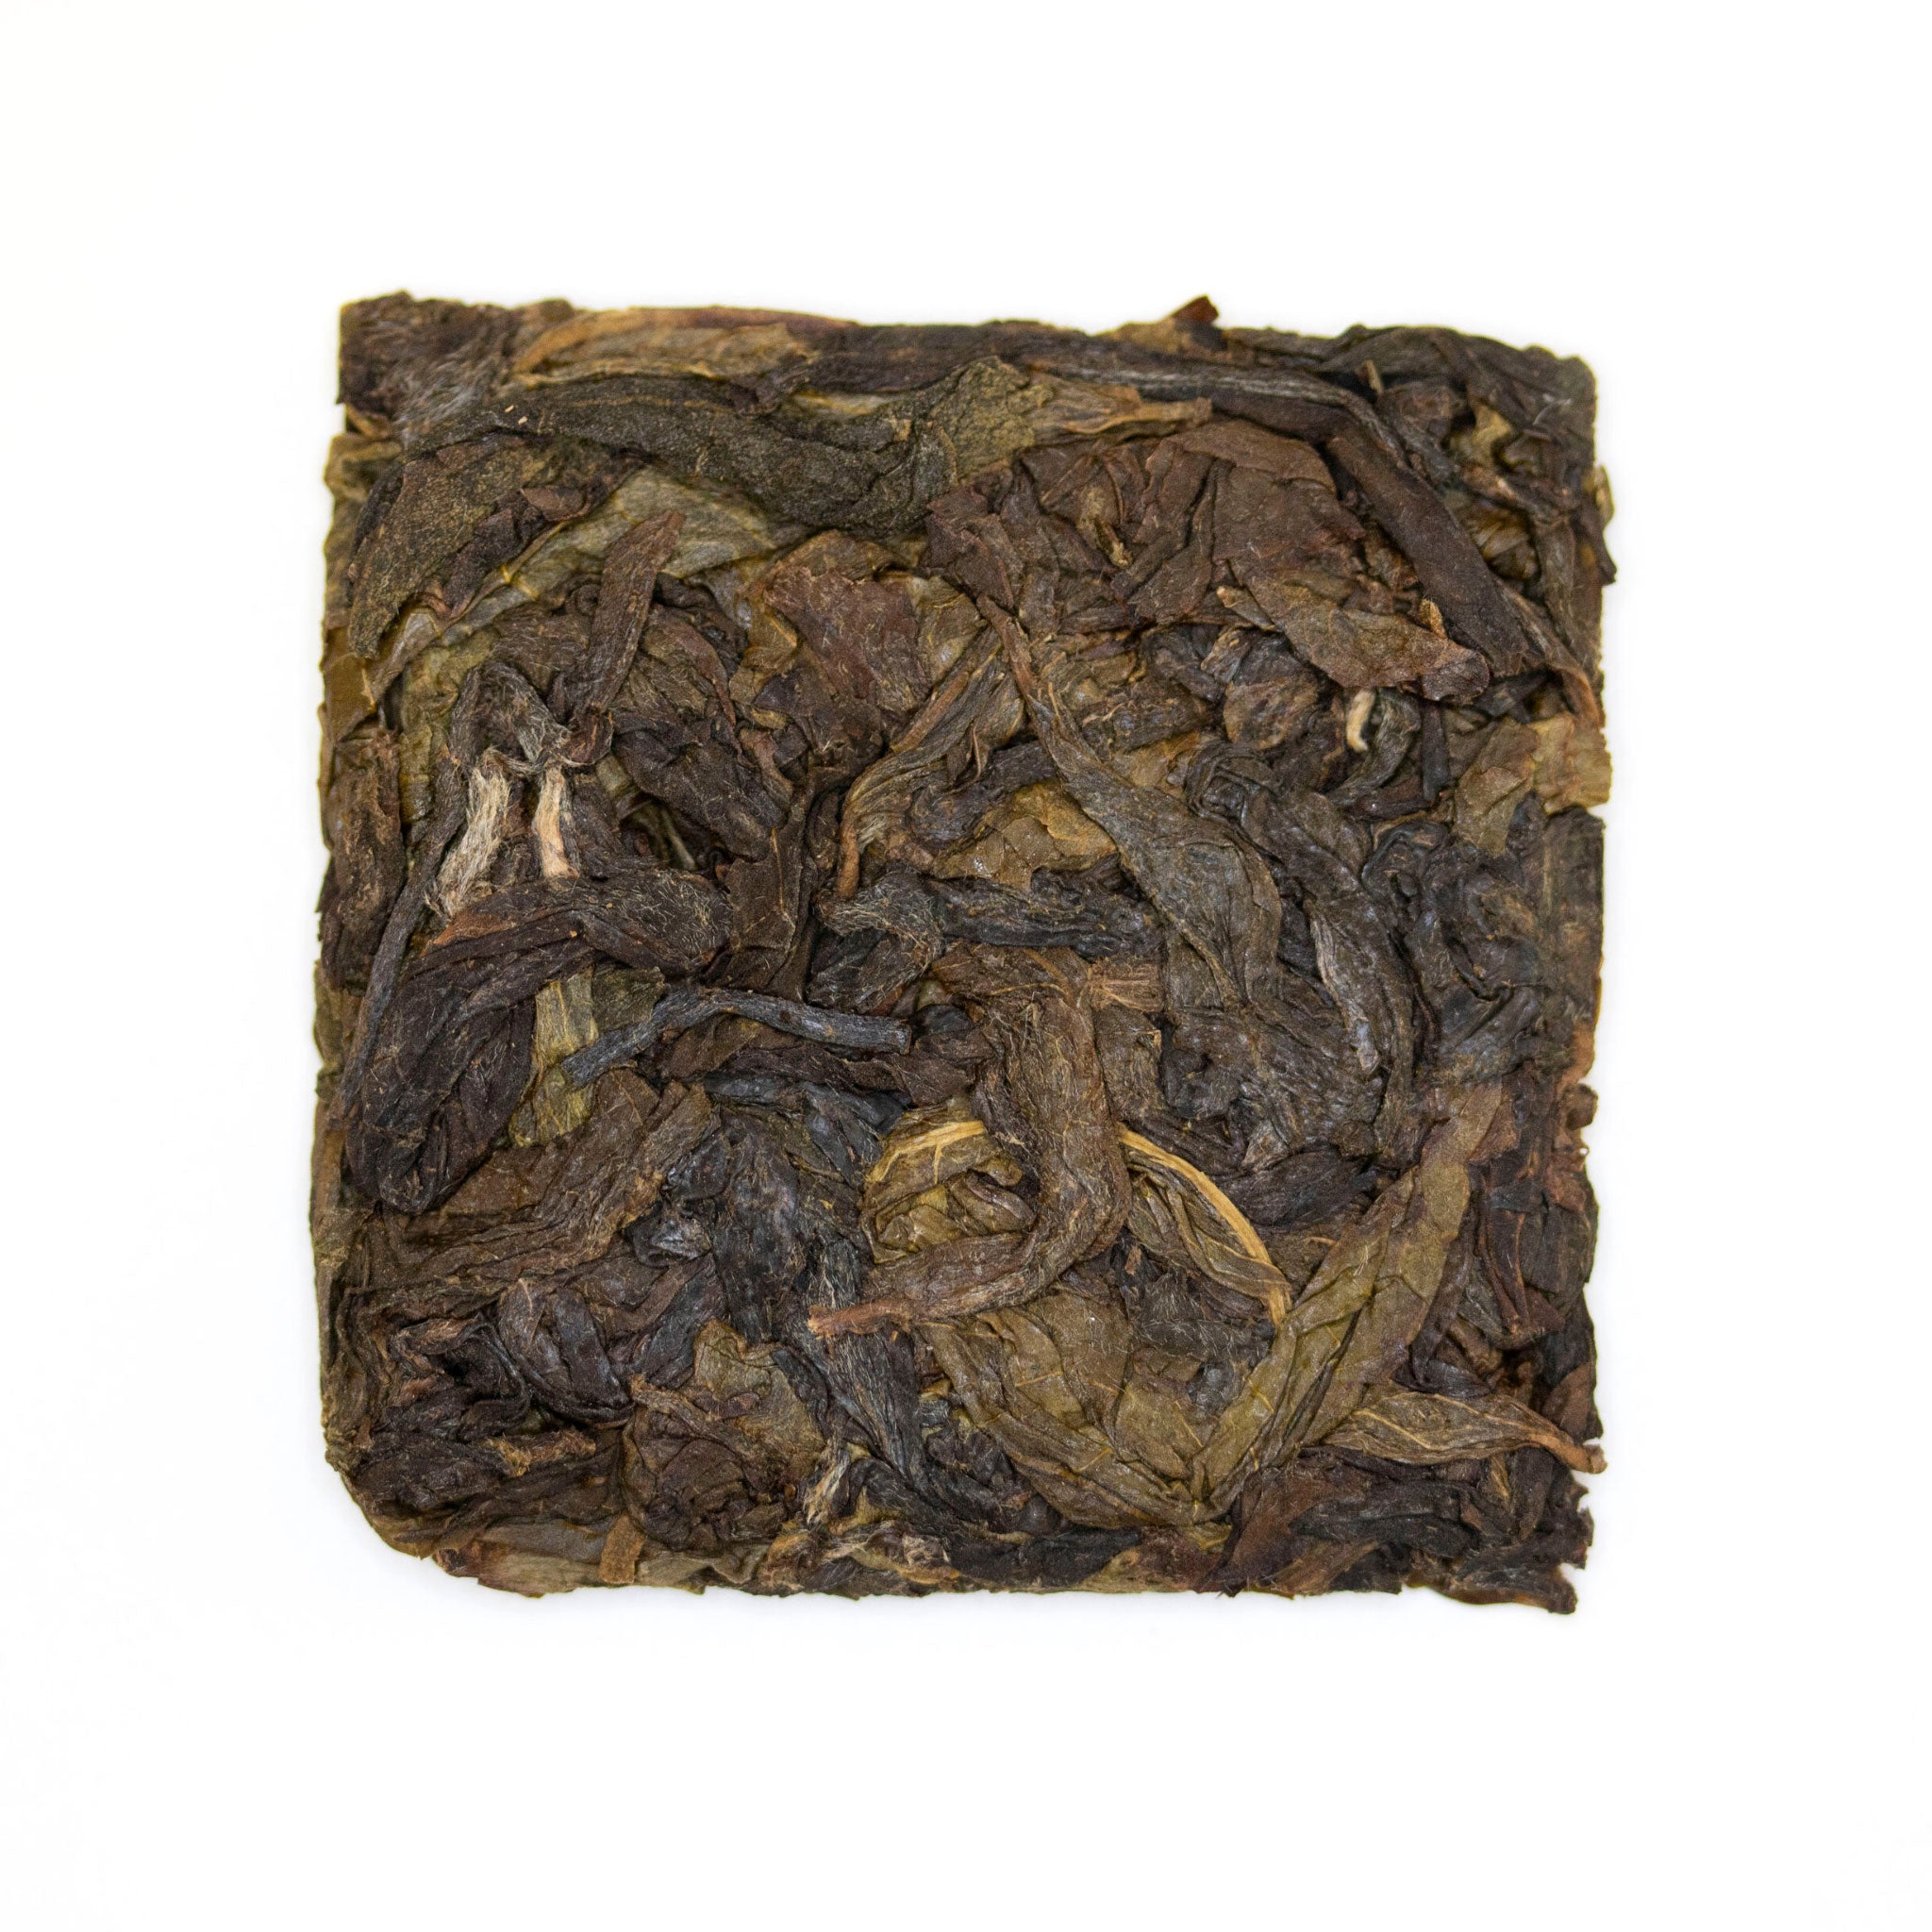 Compressed 5-gram Book of Spells Tieguanyin Oolong tea